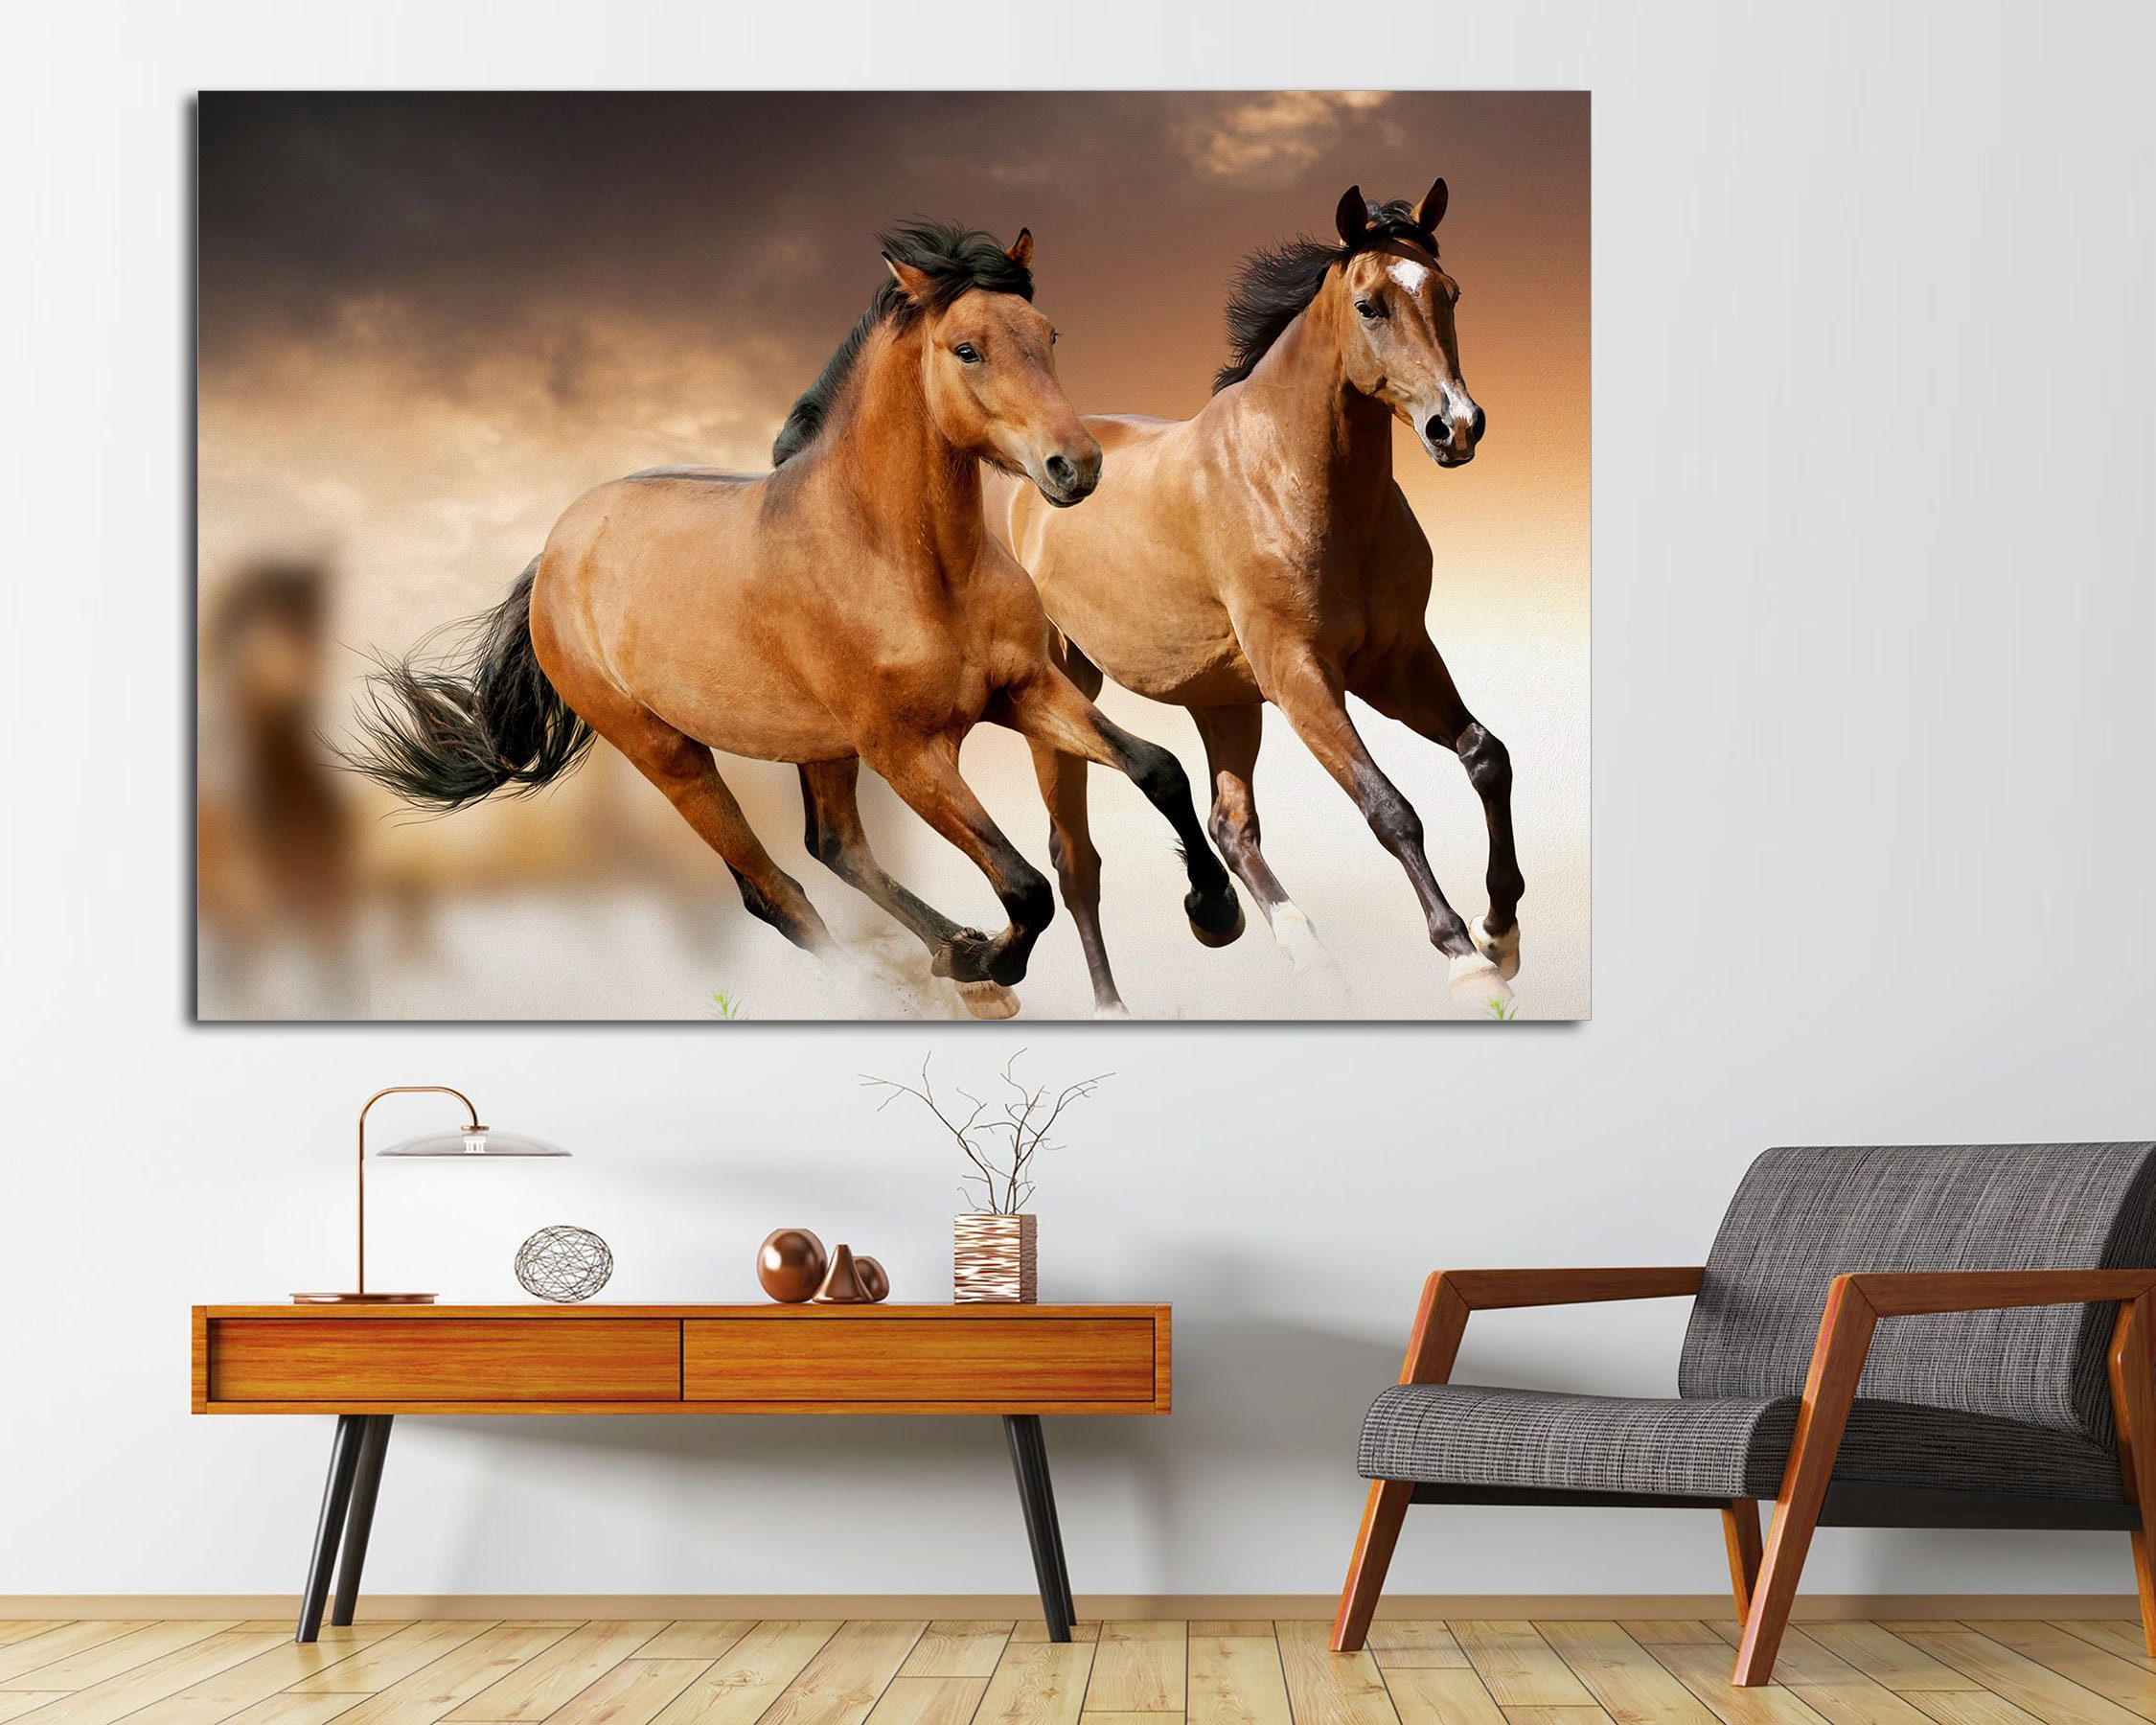 Running horses canvas print, horse art print on canvas, horse room wall art, room decor, interior design, large canvas print. horse poster